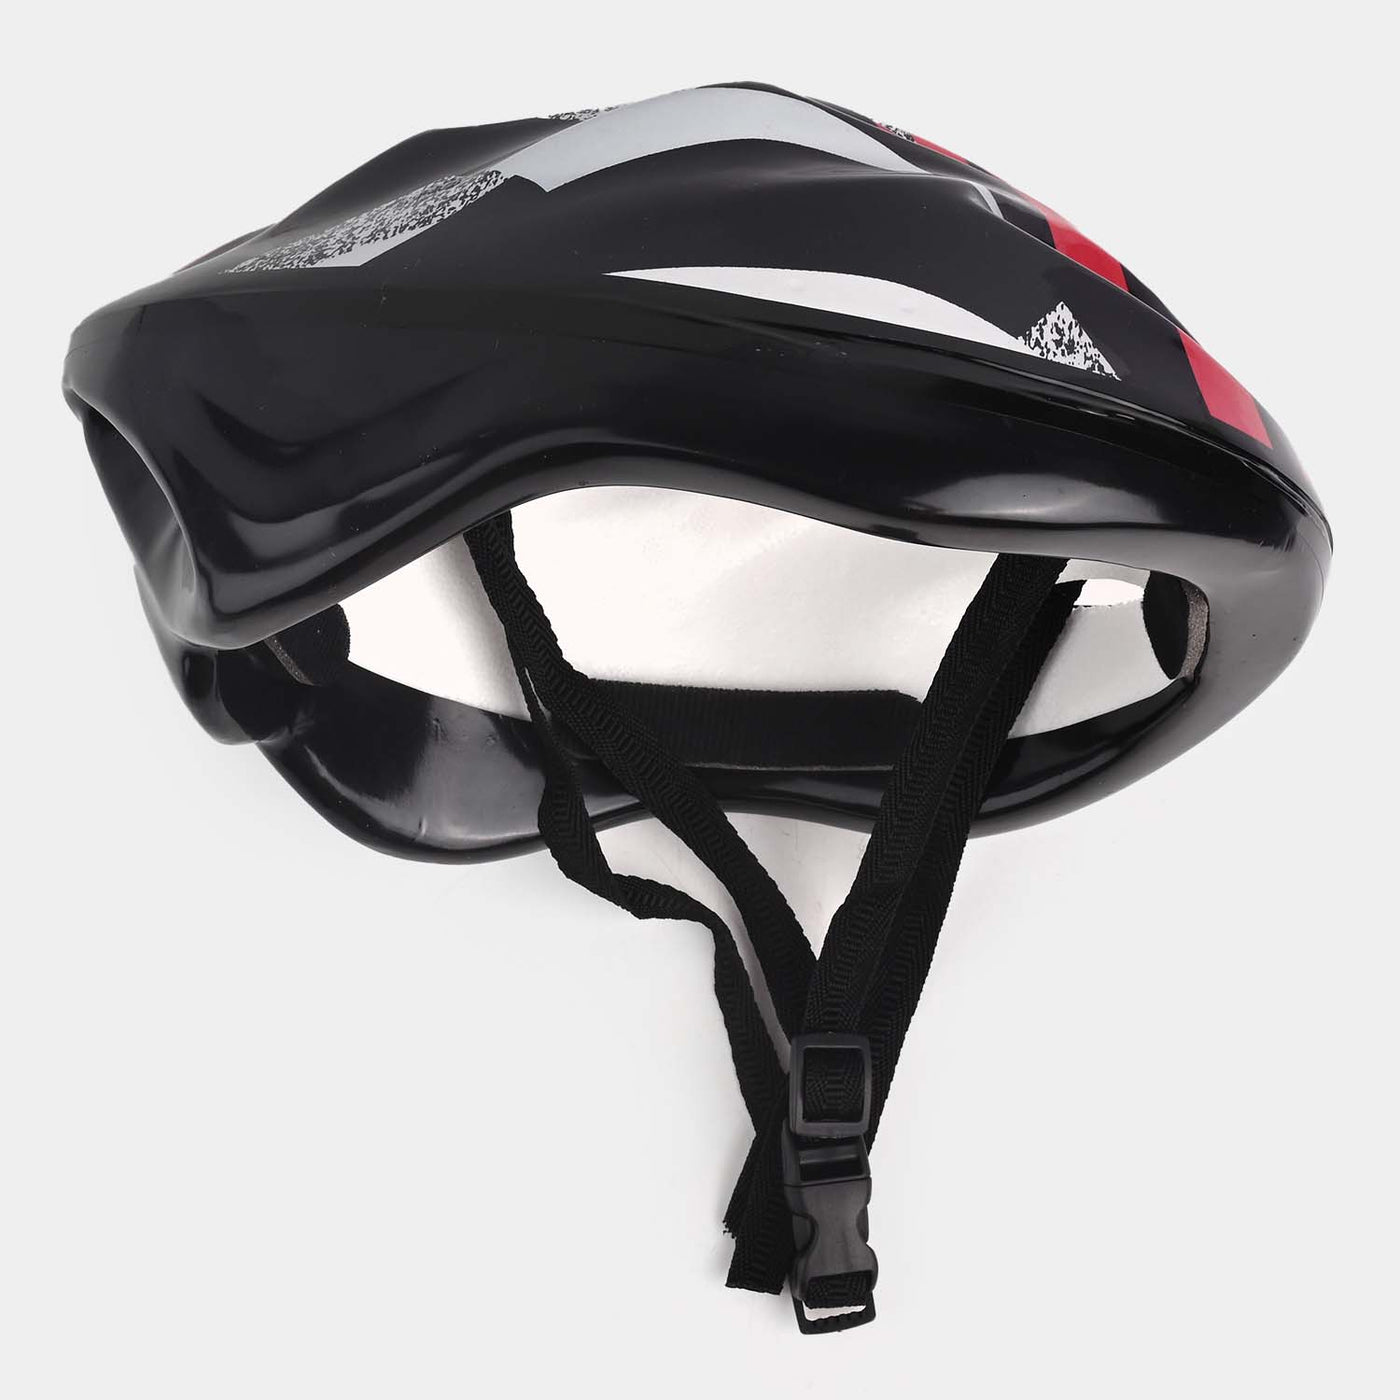 Lightweight Adjustable Bicycle Helmet For Kids